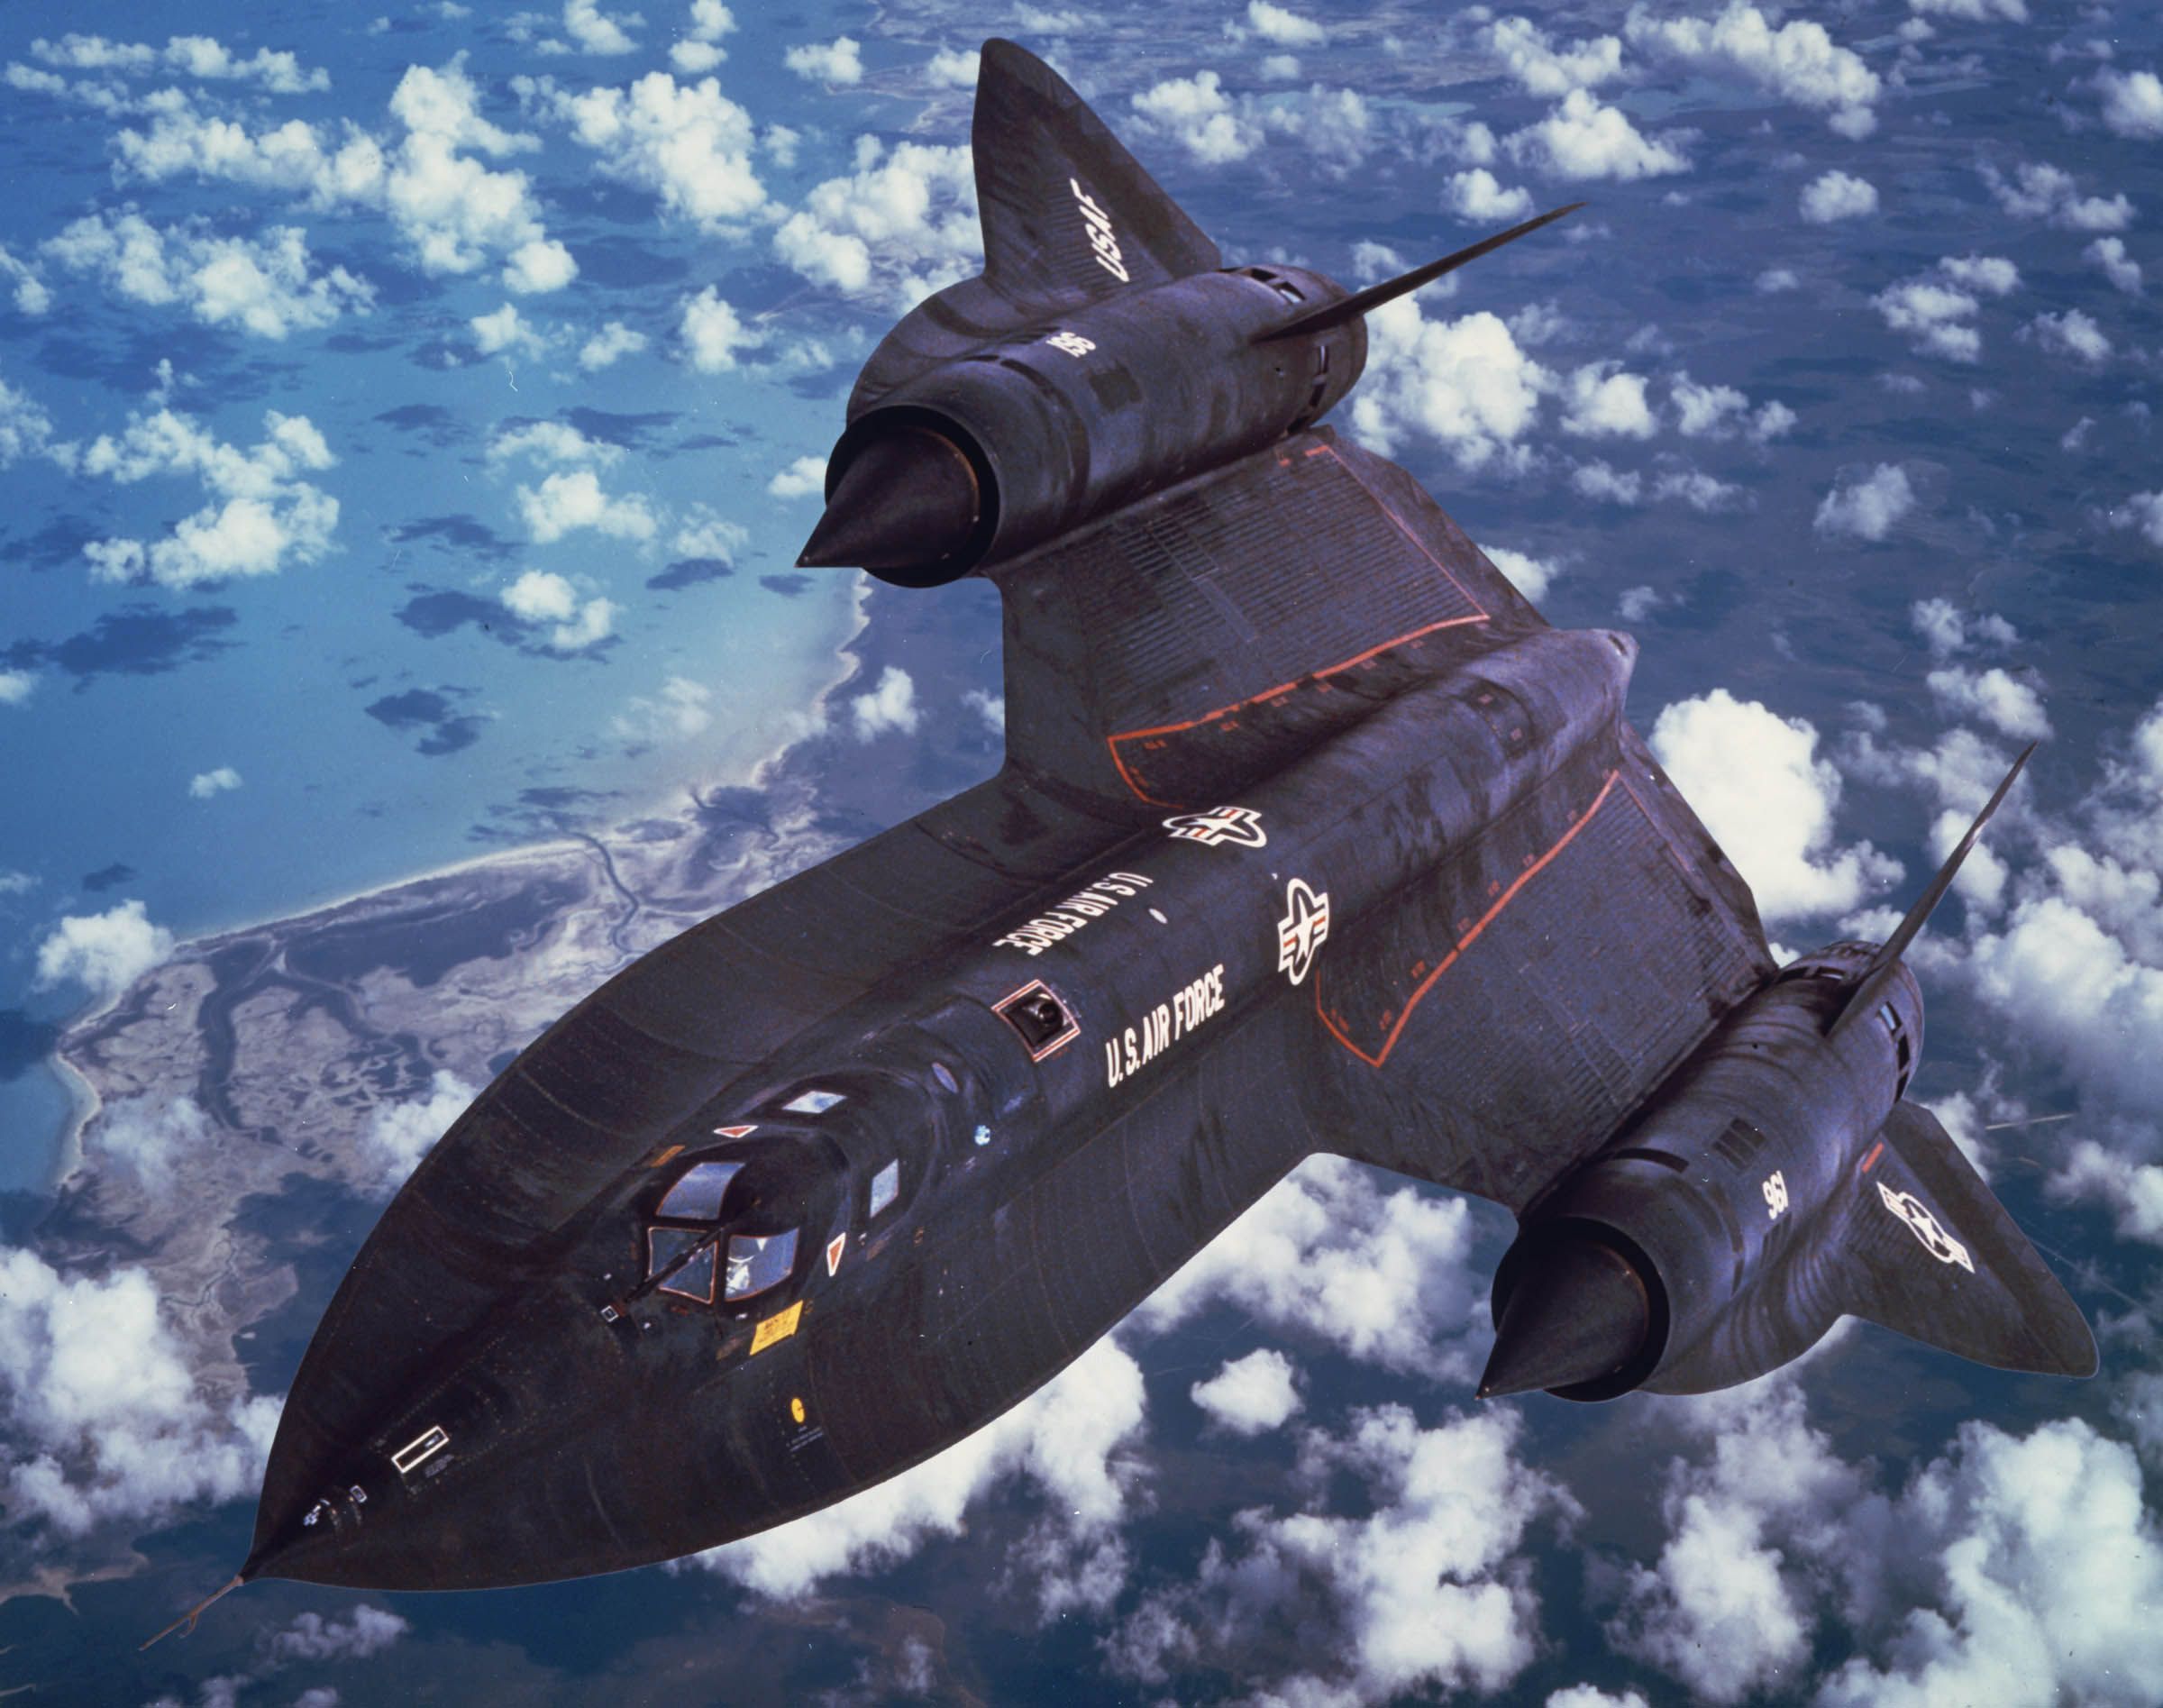 Rare photos of the SR-71 Blackbird show its amazing history